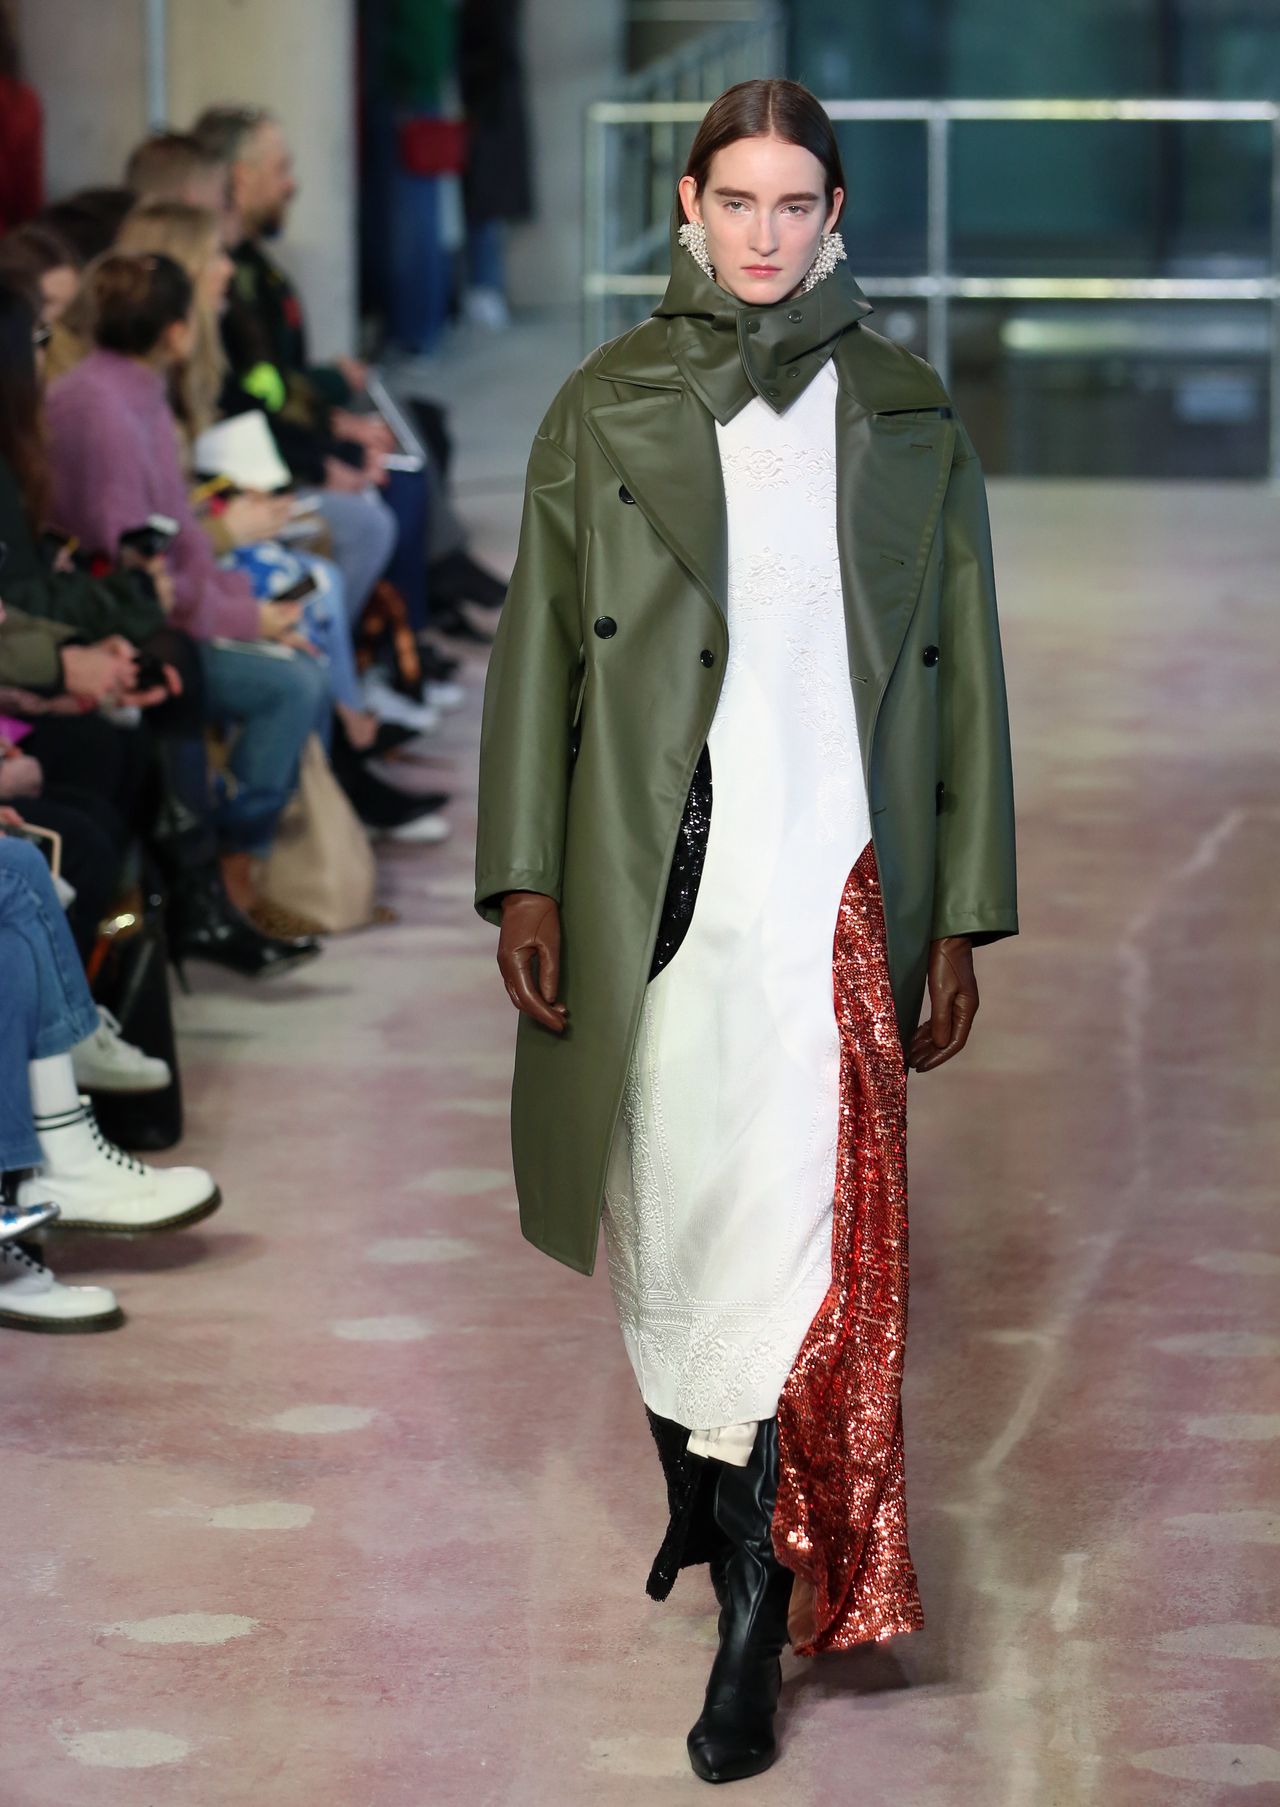 Looks We Love: Alexa Chung's Colourful Raincoat at London Fashion Week